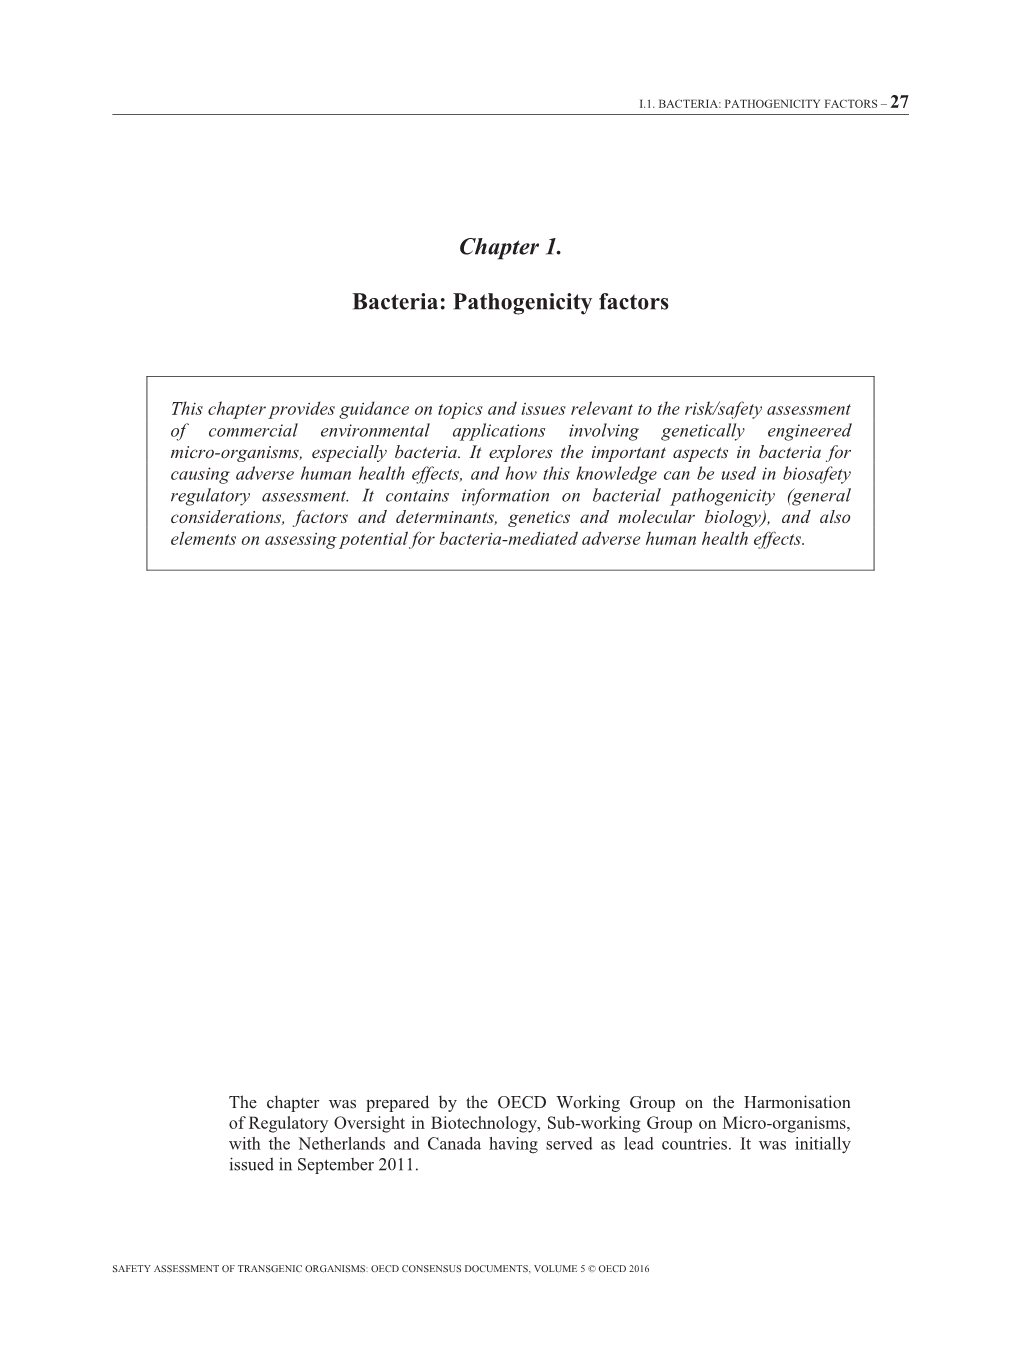 Chapter 1. Bacteria: Pathogenicity Factors